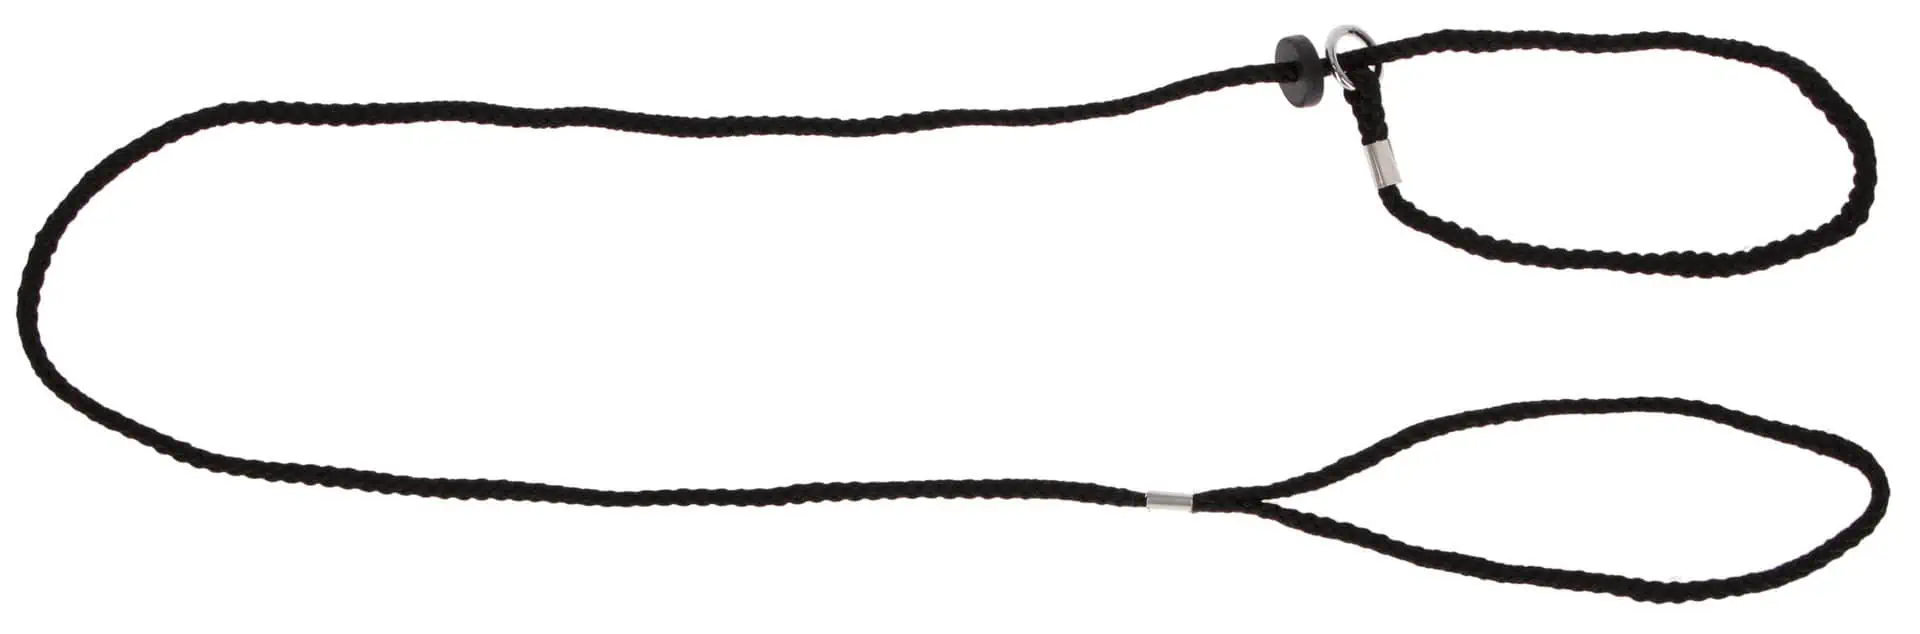 Lesa demonstrativa nylon negru cu guler 6 mm x 125 cm